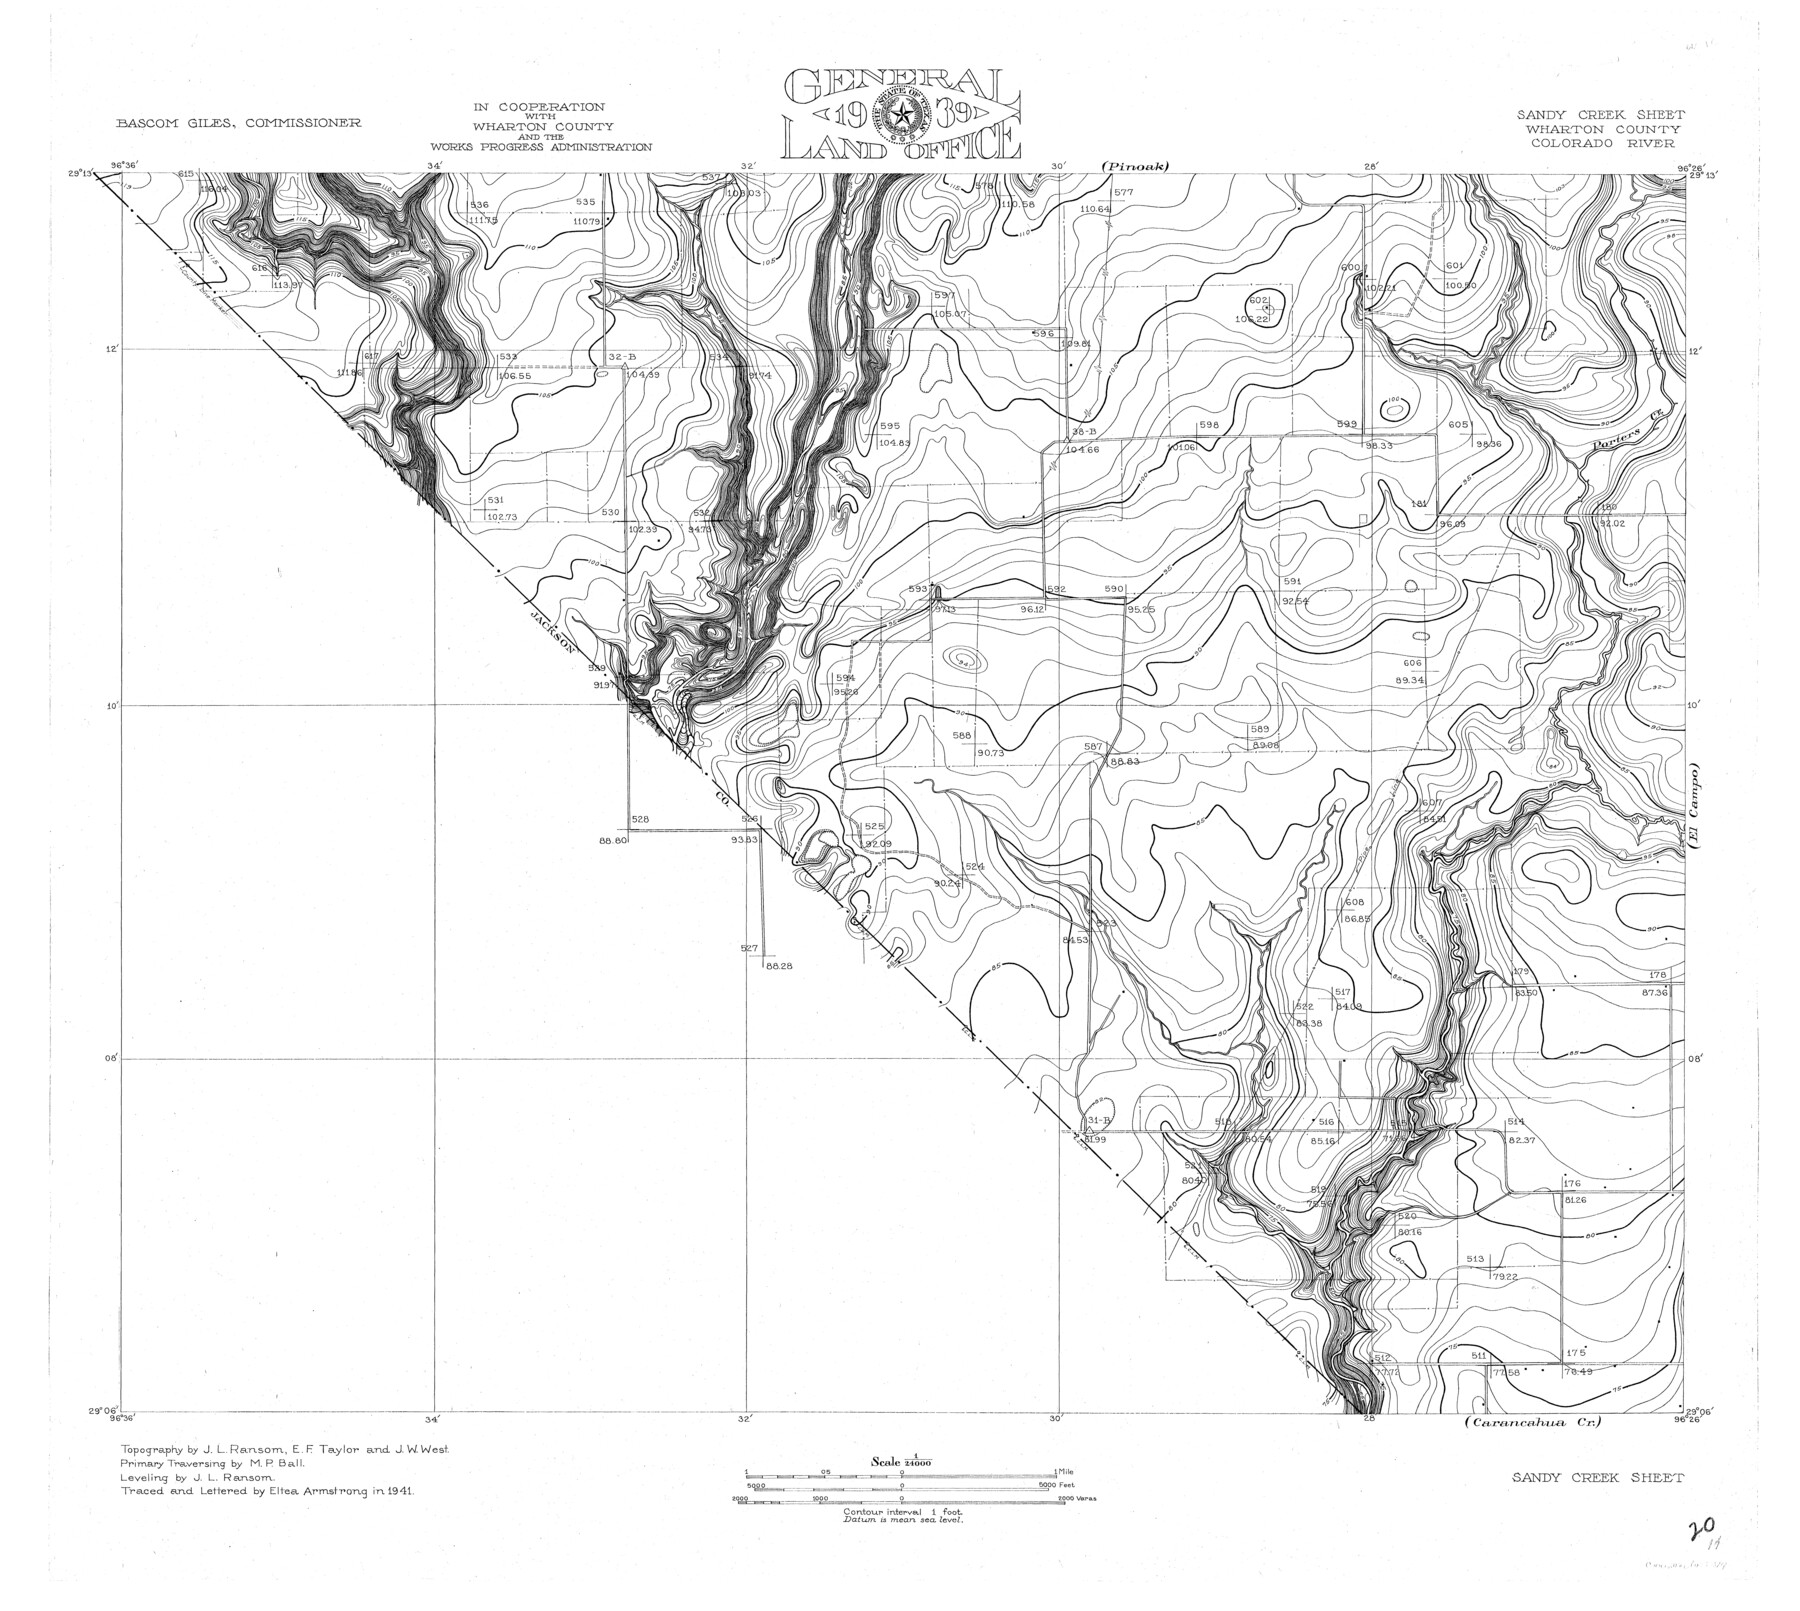 65319, Colorado River, Sandy Creek Sheet, General Map Collection